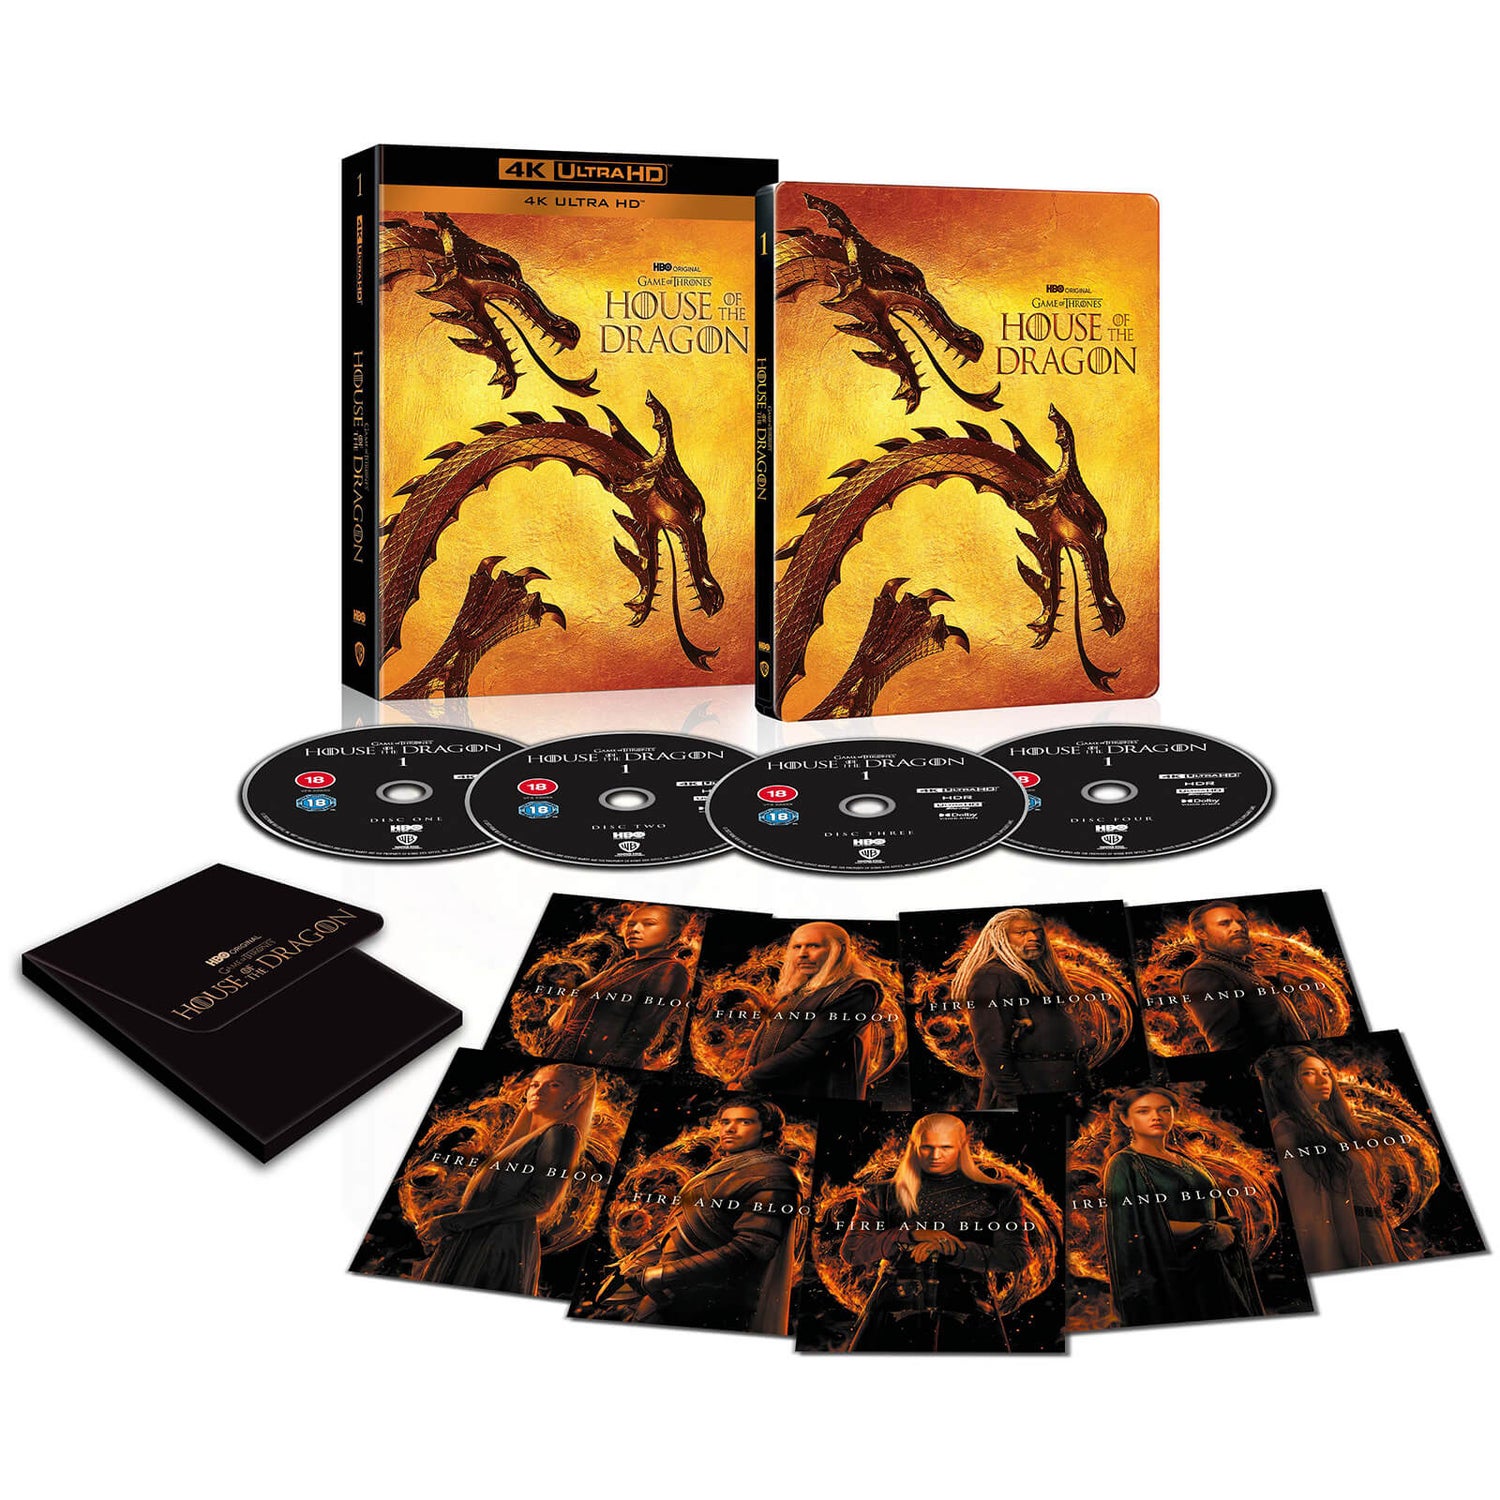 Loki: The Complete First Season New Blu-ray Steelbook Rare